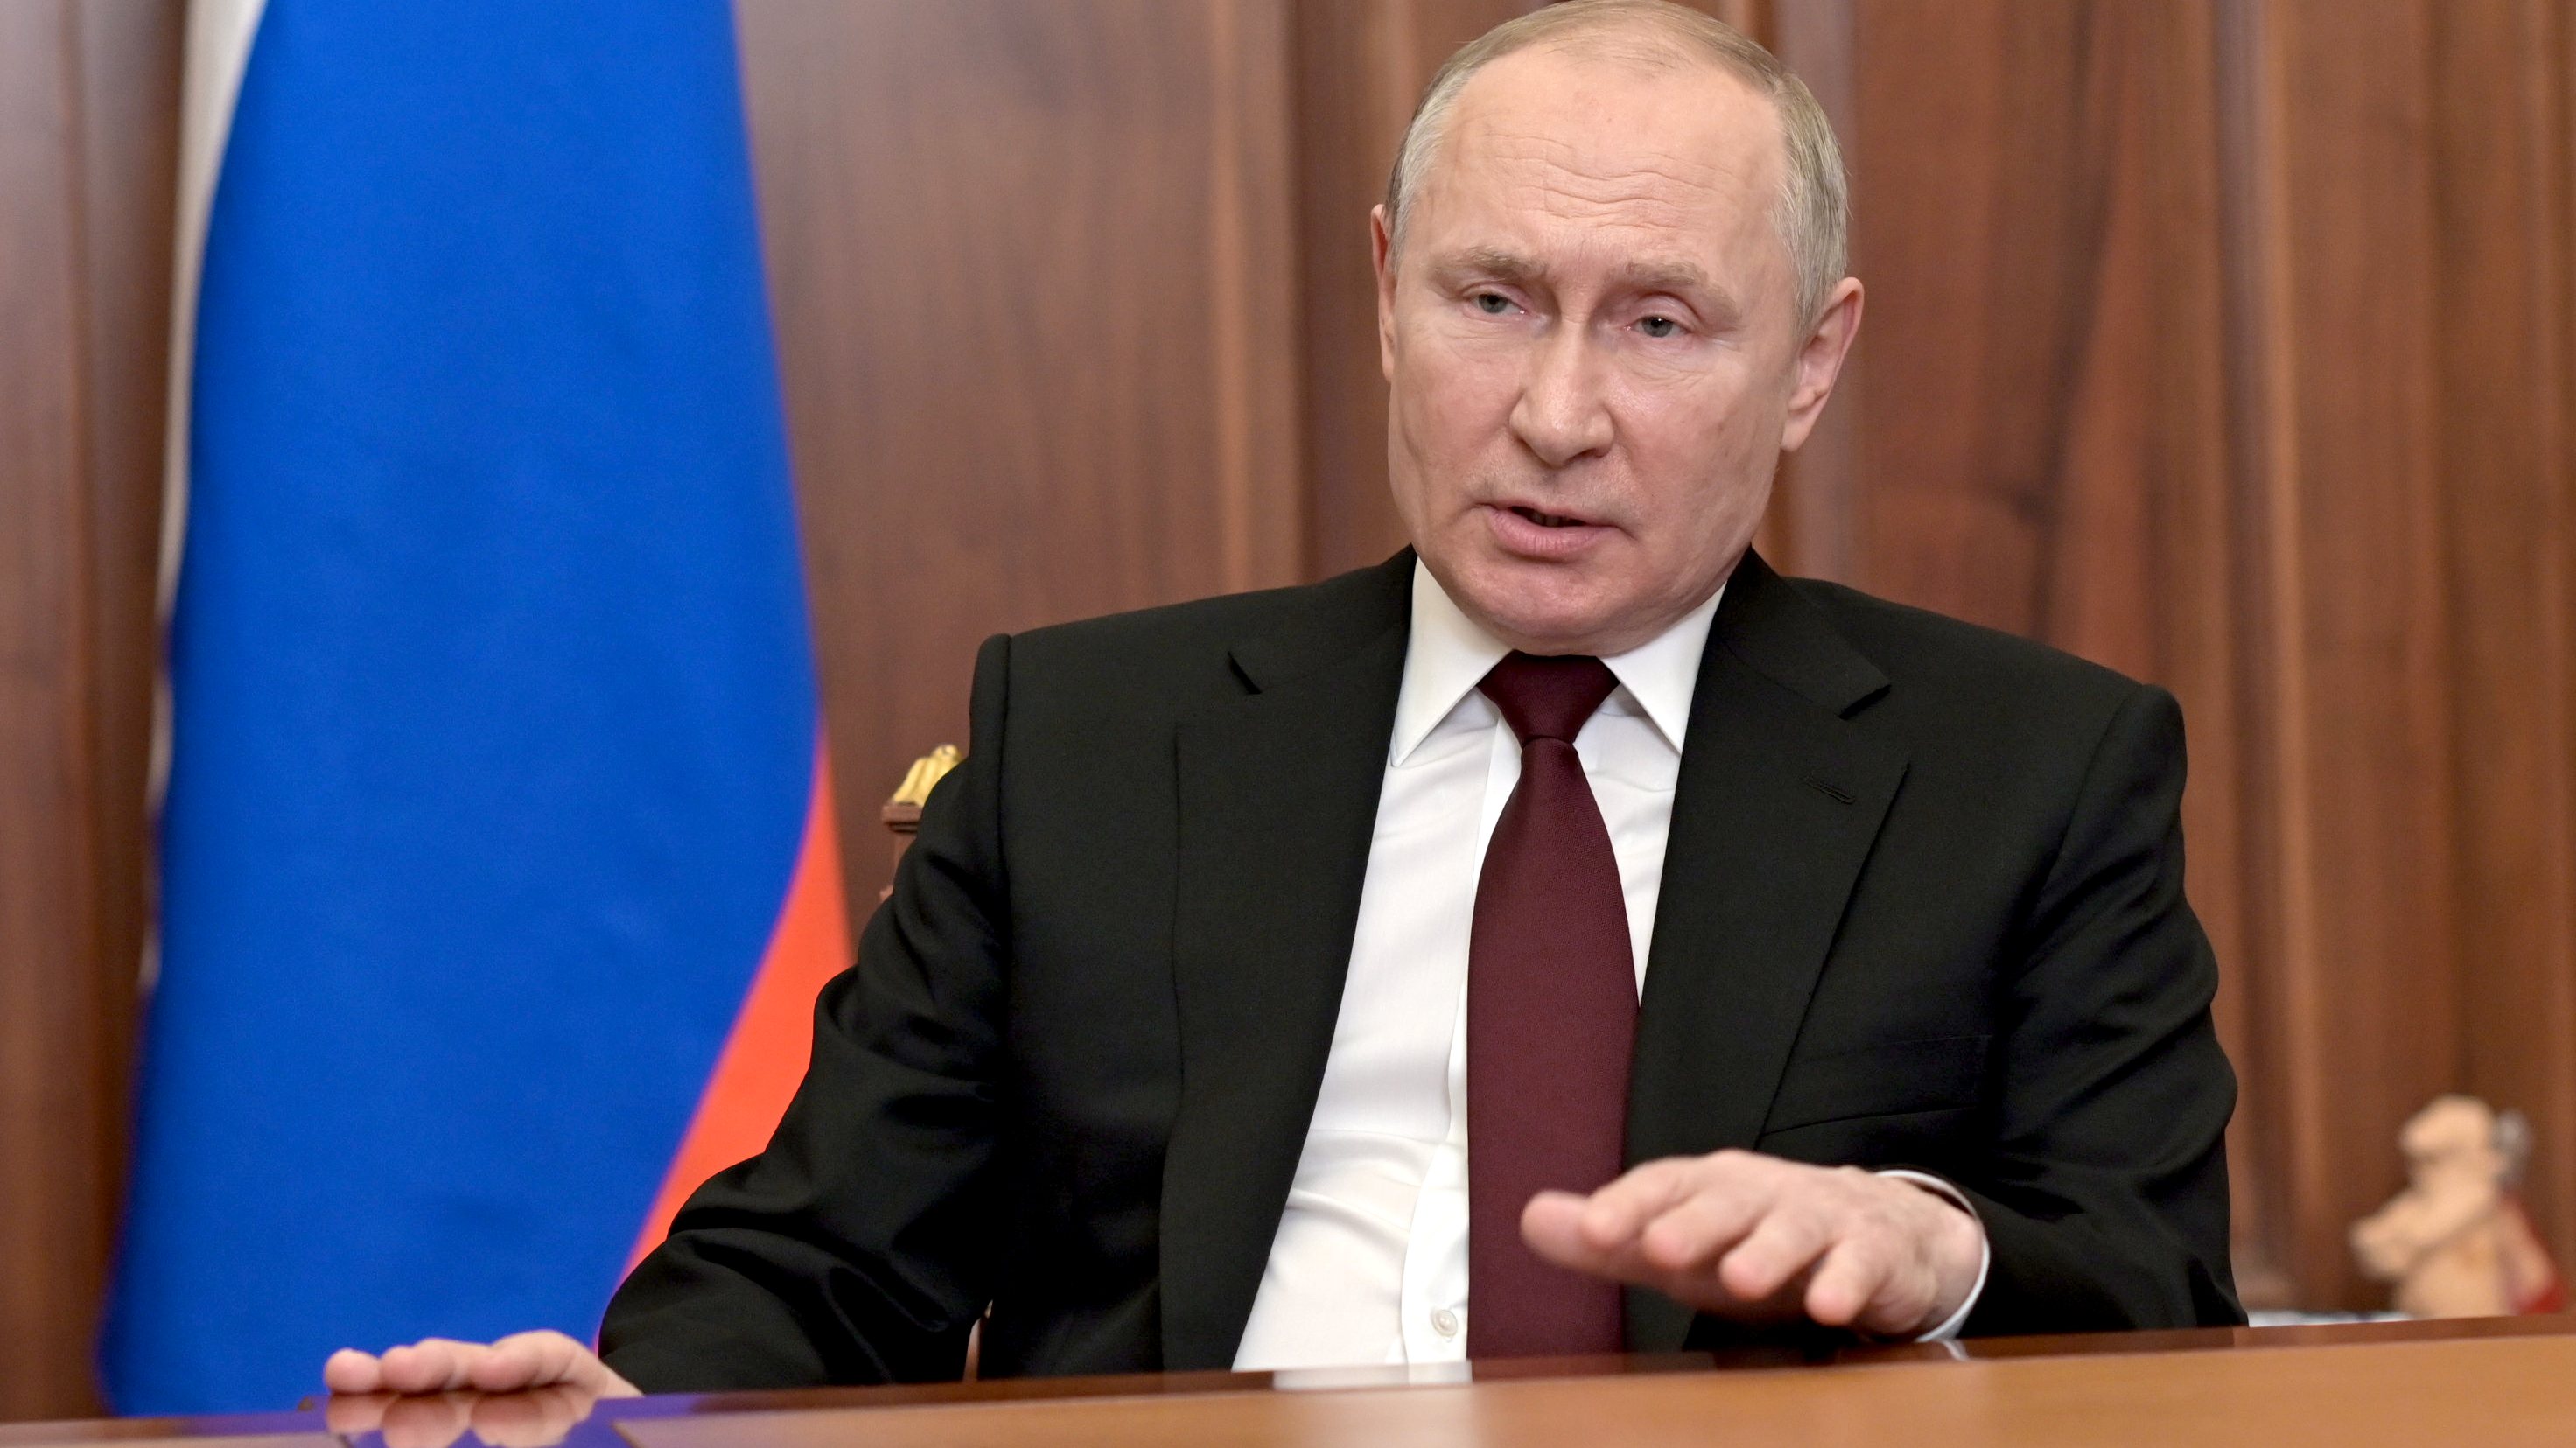 Russian President Putin addresses the nation